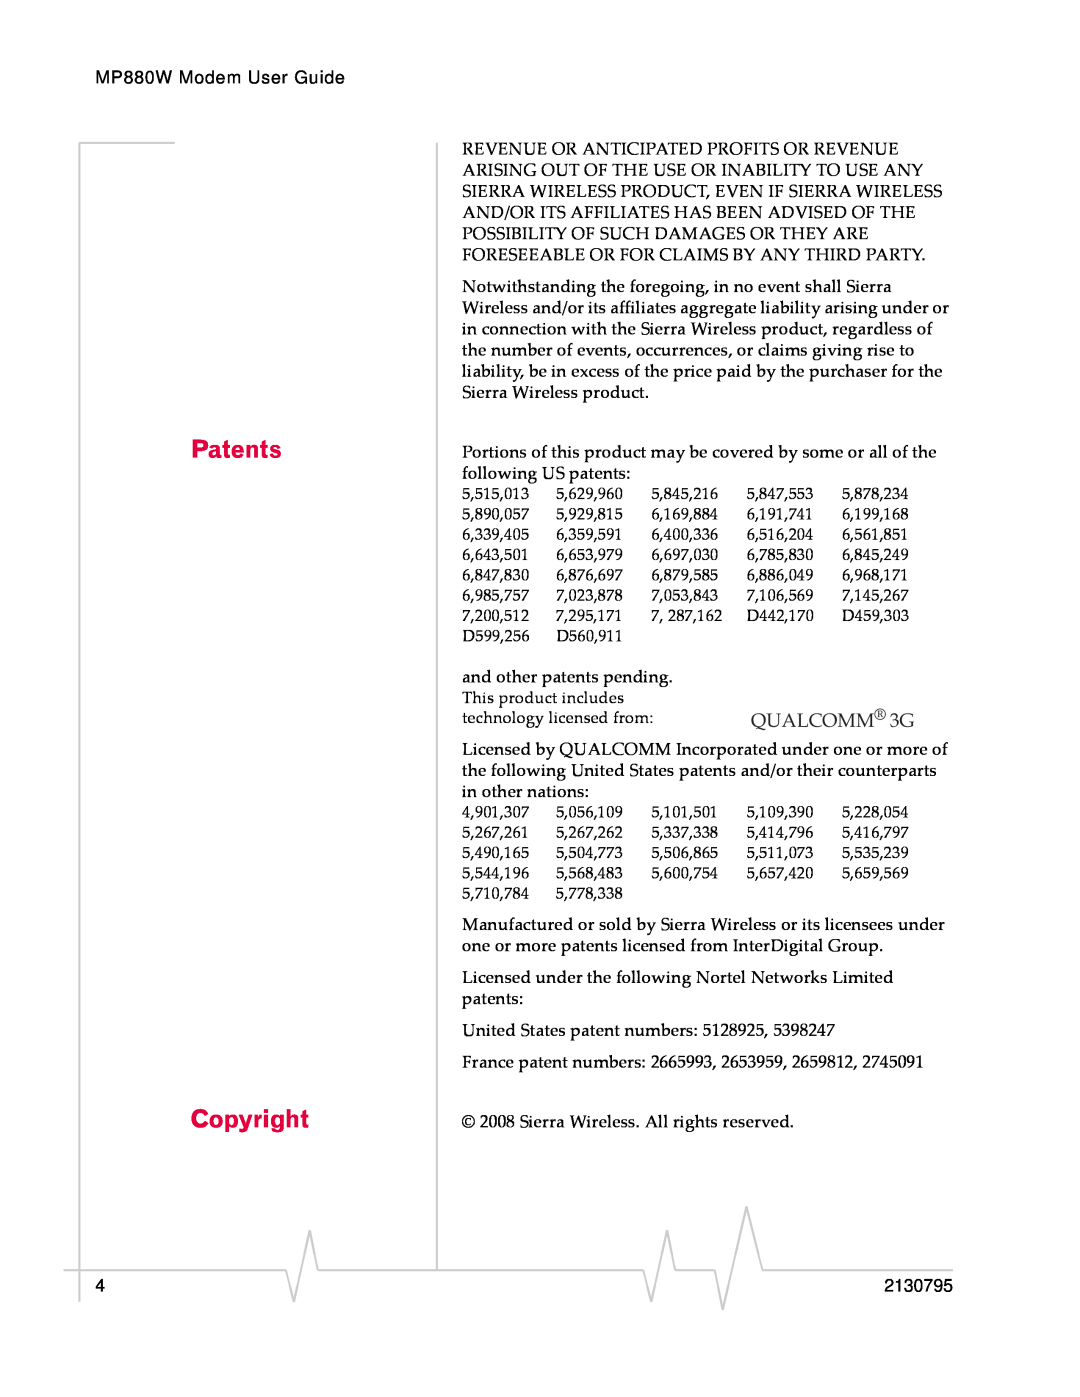 Sierra Wireless MP 880W manual Patents Copyright, QUALCOMM 3G 